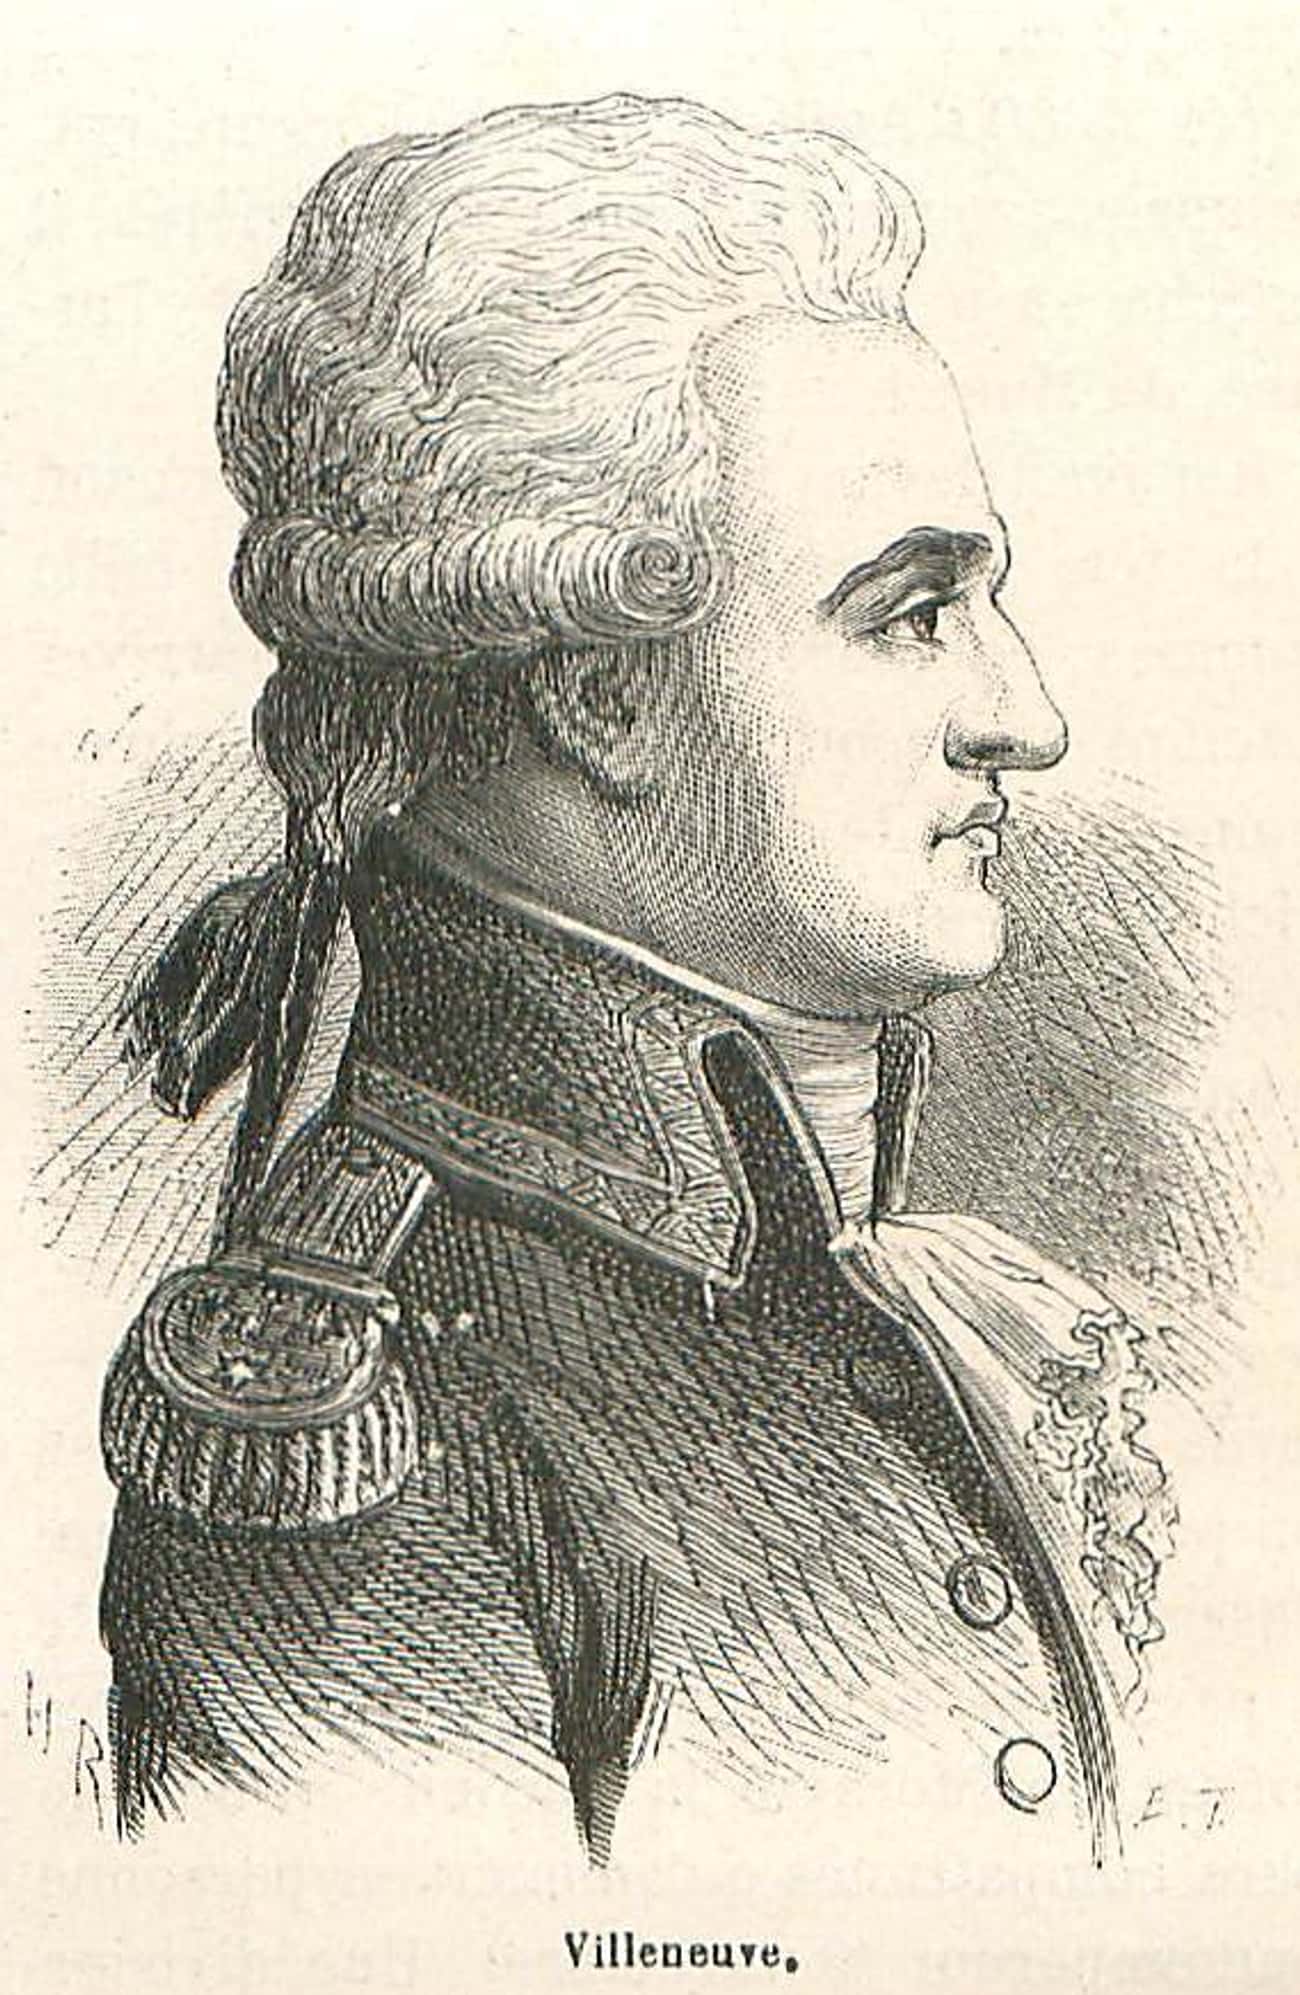 Pierre-Charles Villeneuve